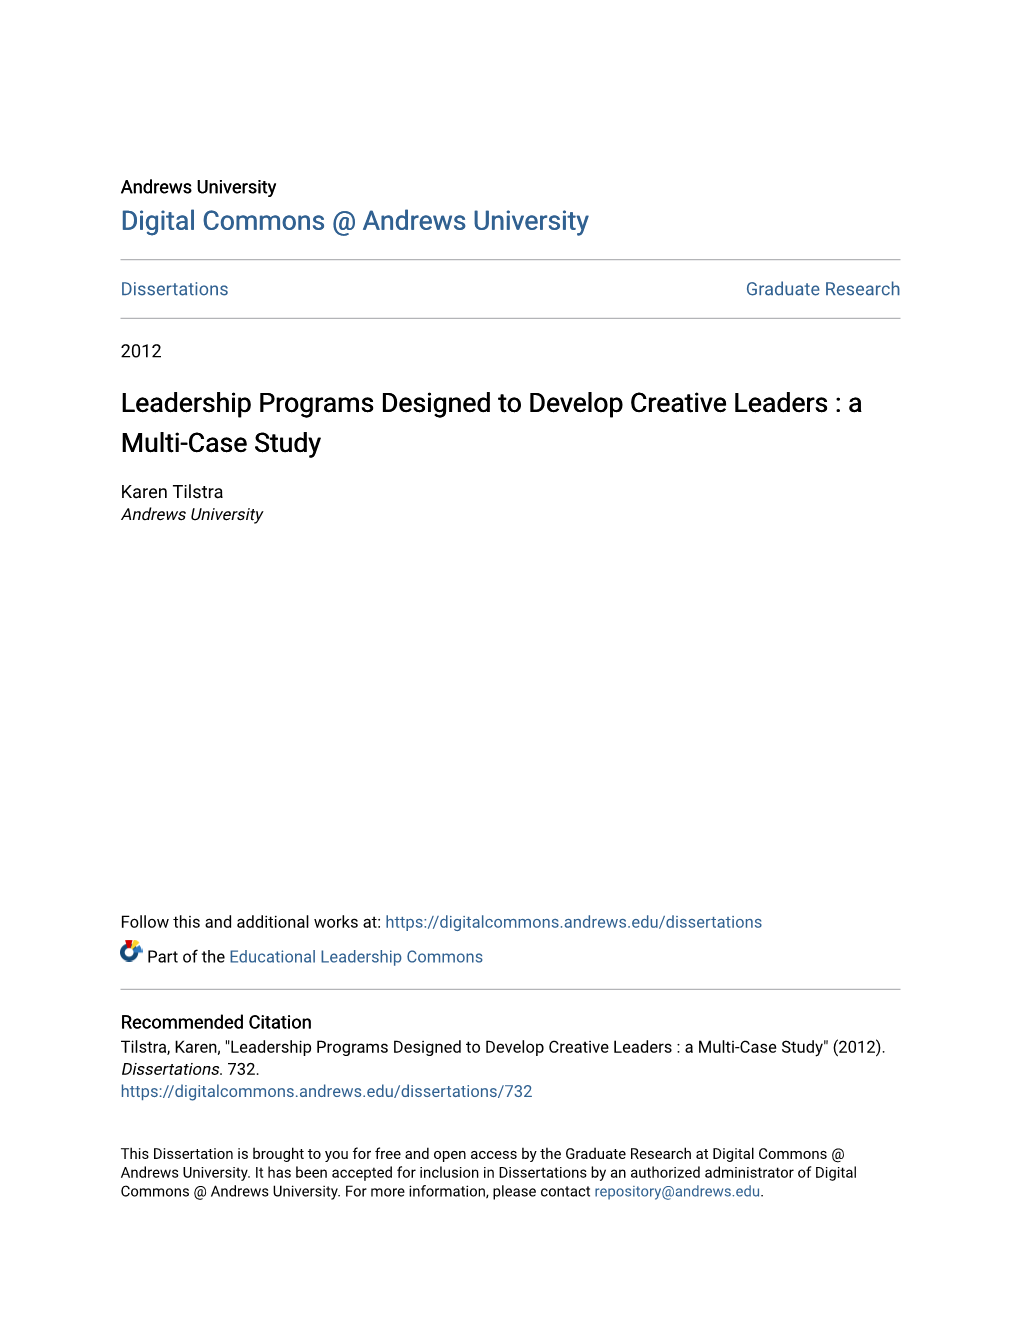 Leadership Programs Designed to Develop Creative Leaders : a Multi-Case Study